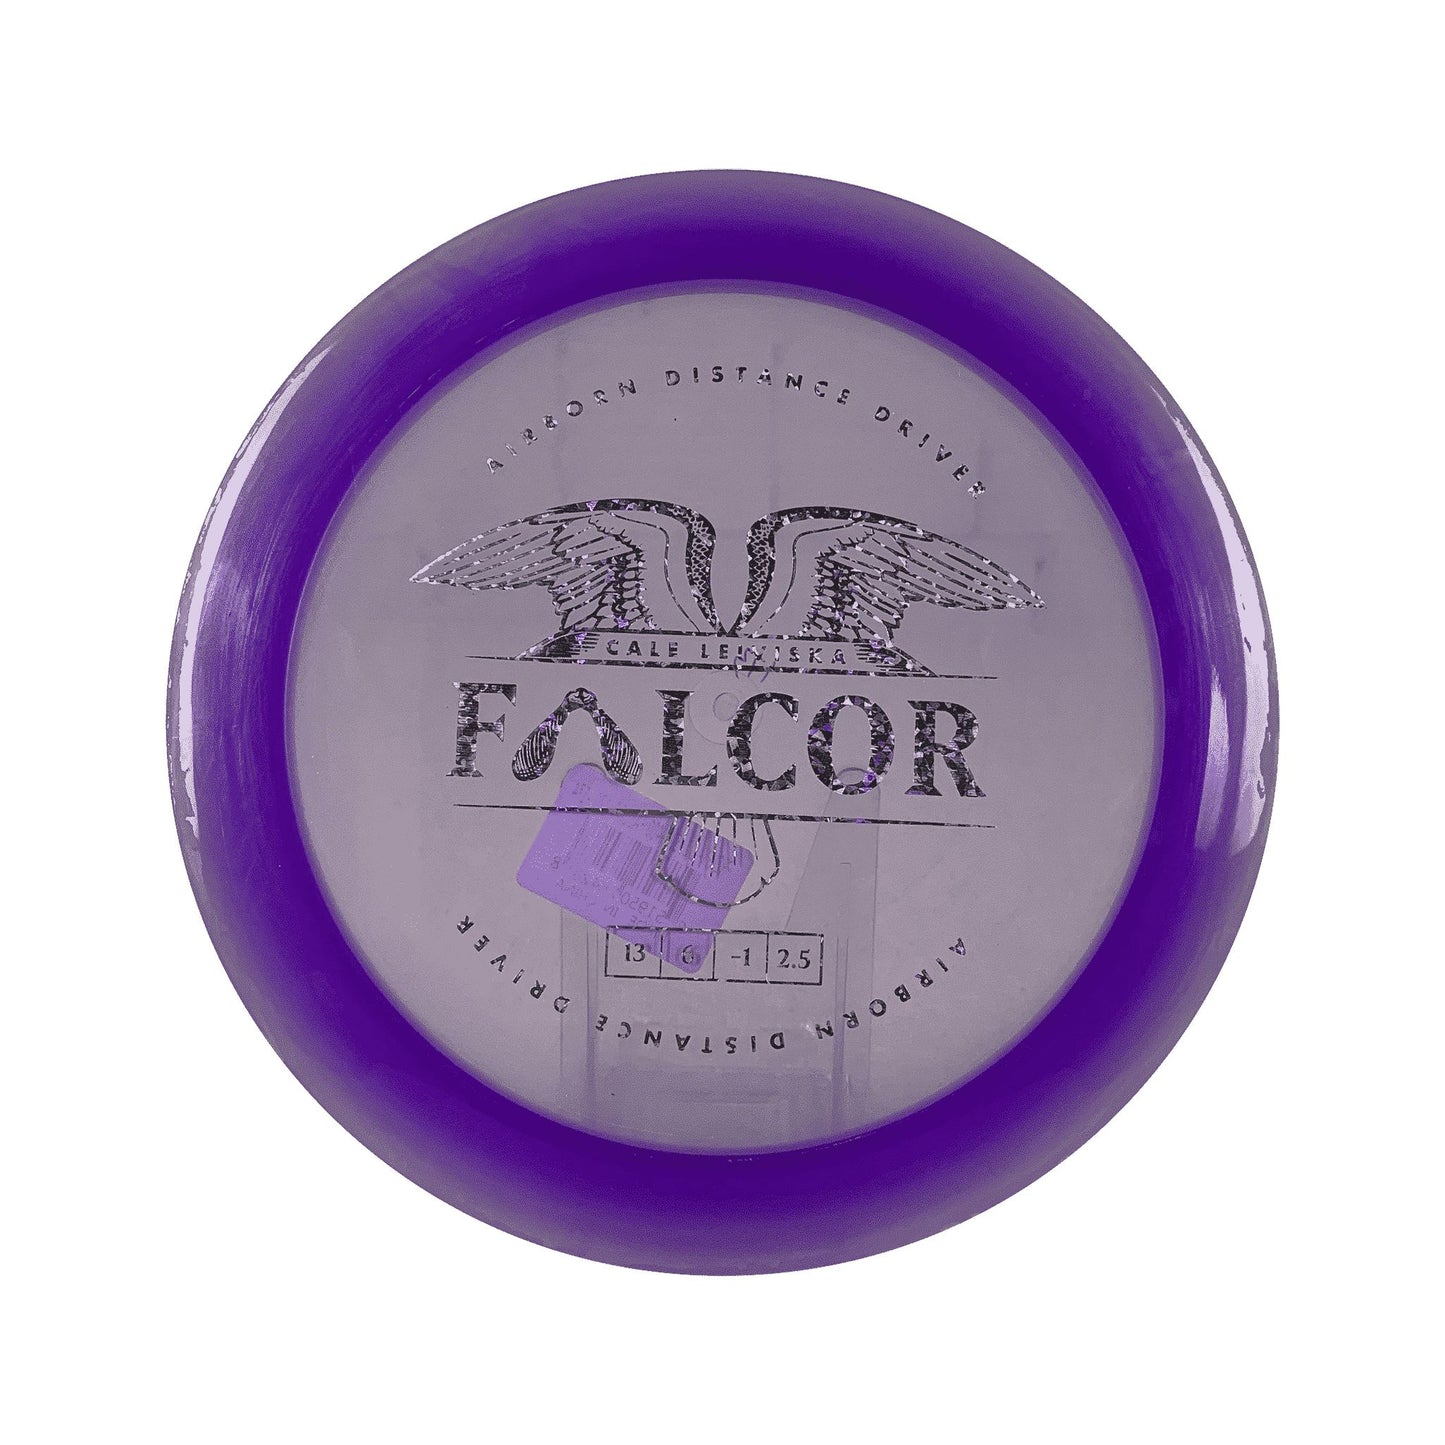 400 Falcor - Airborn Cale Leiviska Disc Prodigy purple 172 